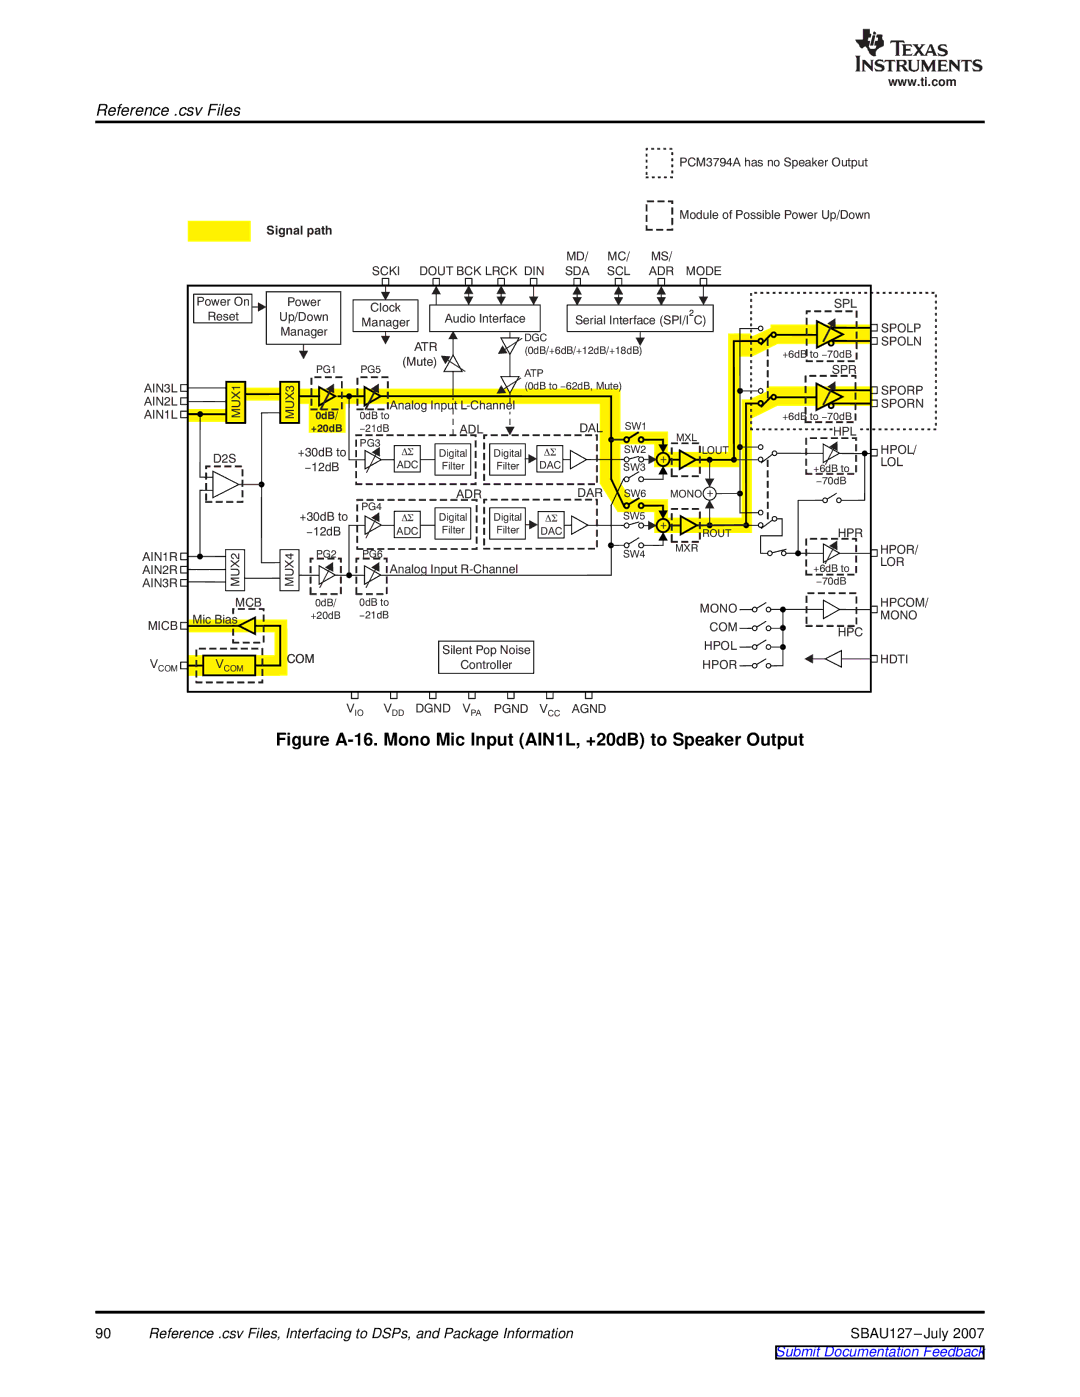 Texas Instruments DEM-DAI3793A manual Figure A-16. Mono Mic Input AIN1L, +20dB to Speaker Output 